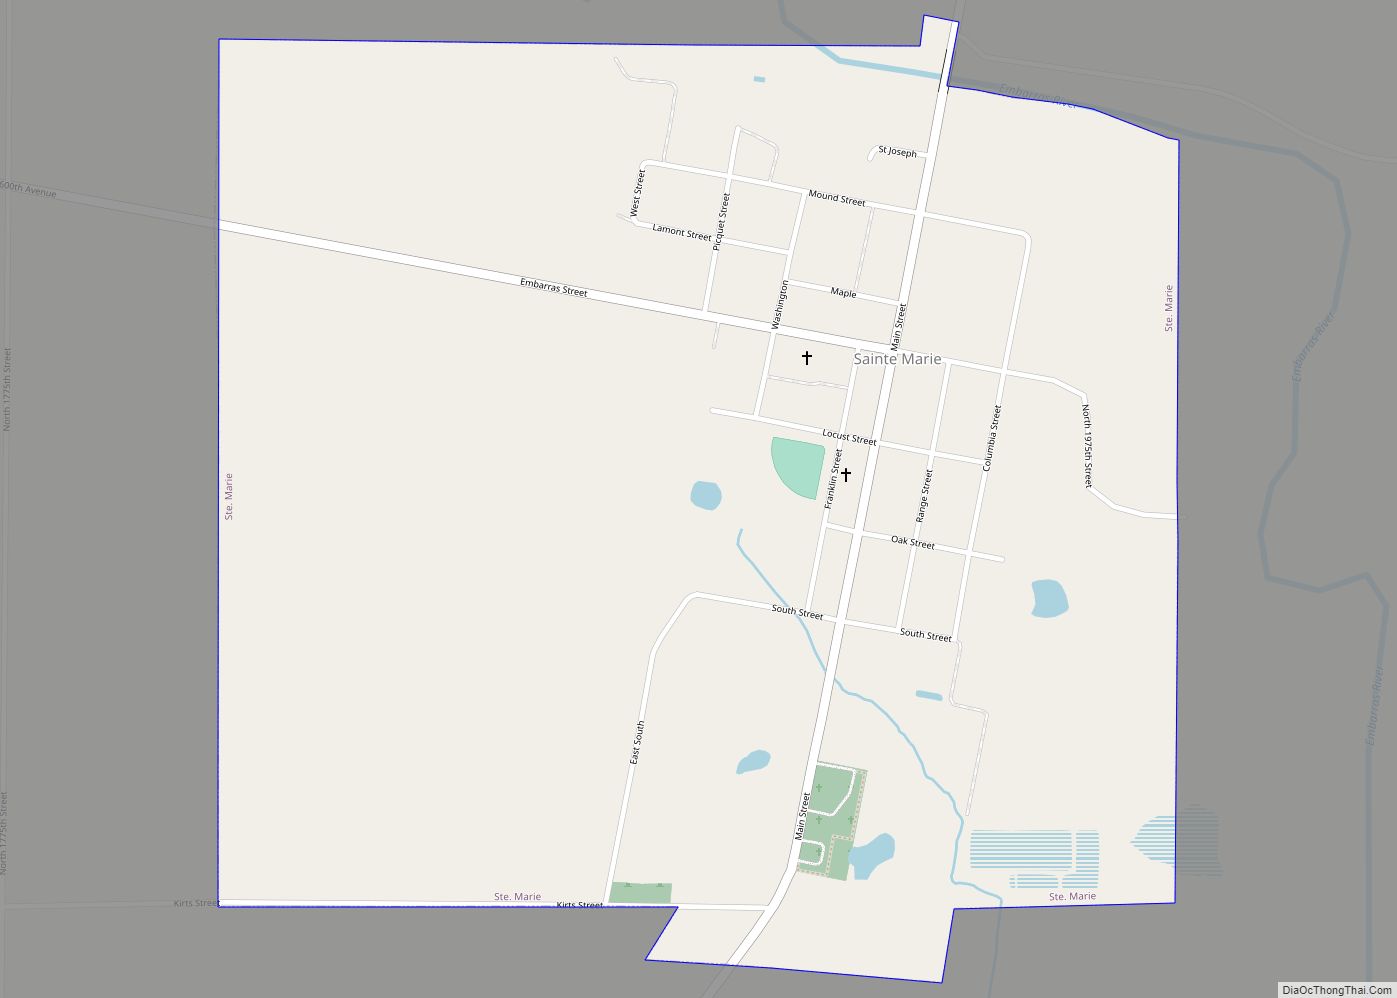 Map of Ste. Marie village